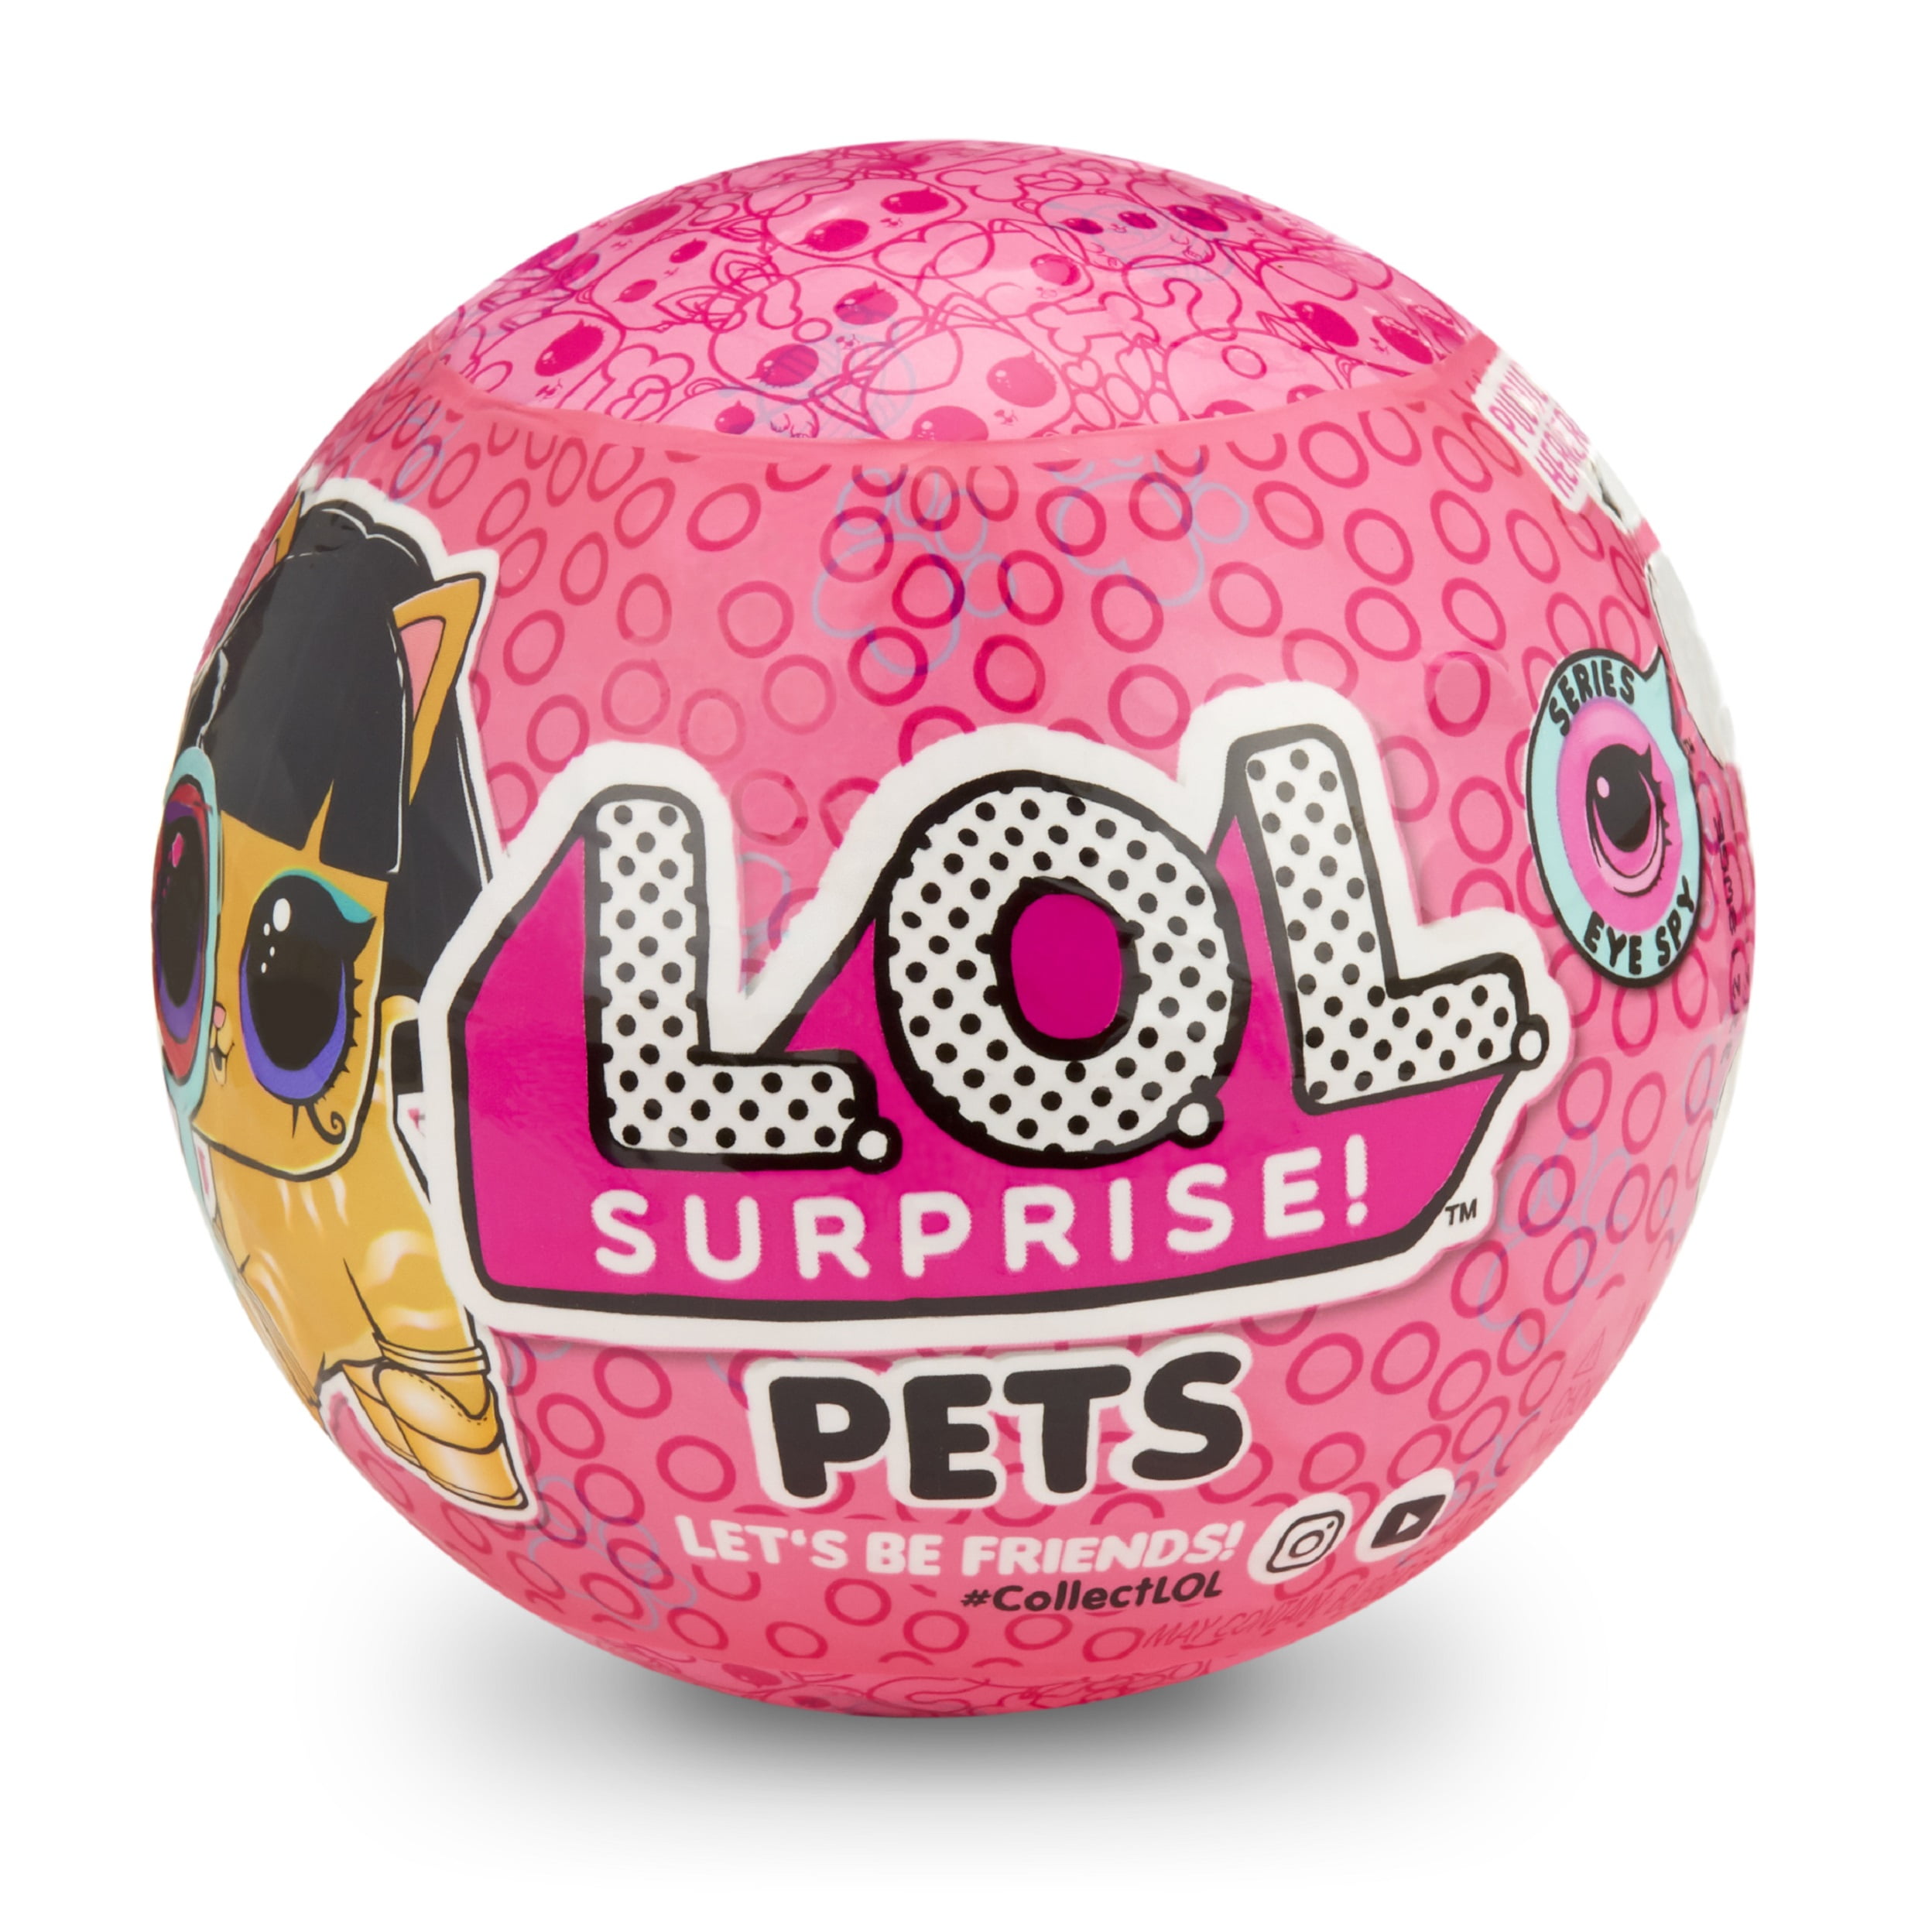 L.O.L. Surprise Surprise Pets Ball Series 4 Collectible Dolls